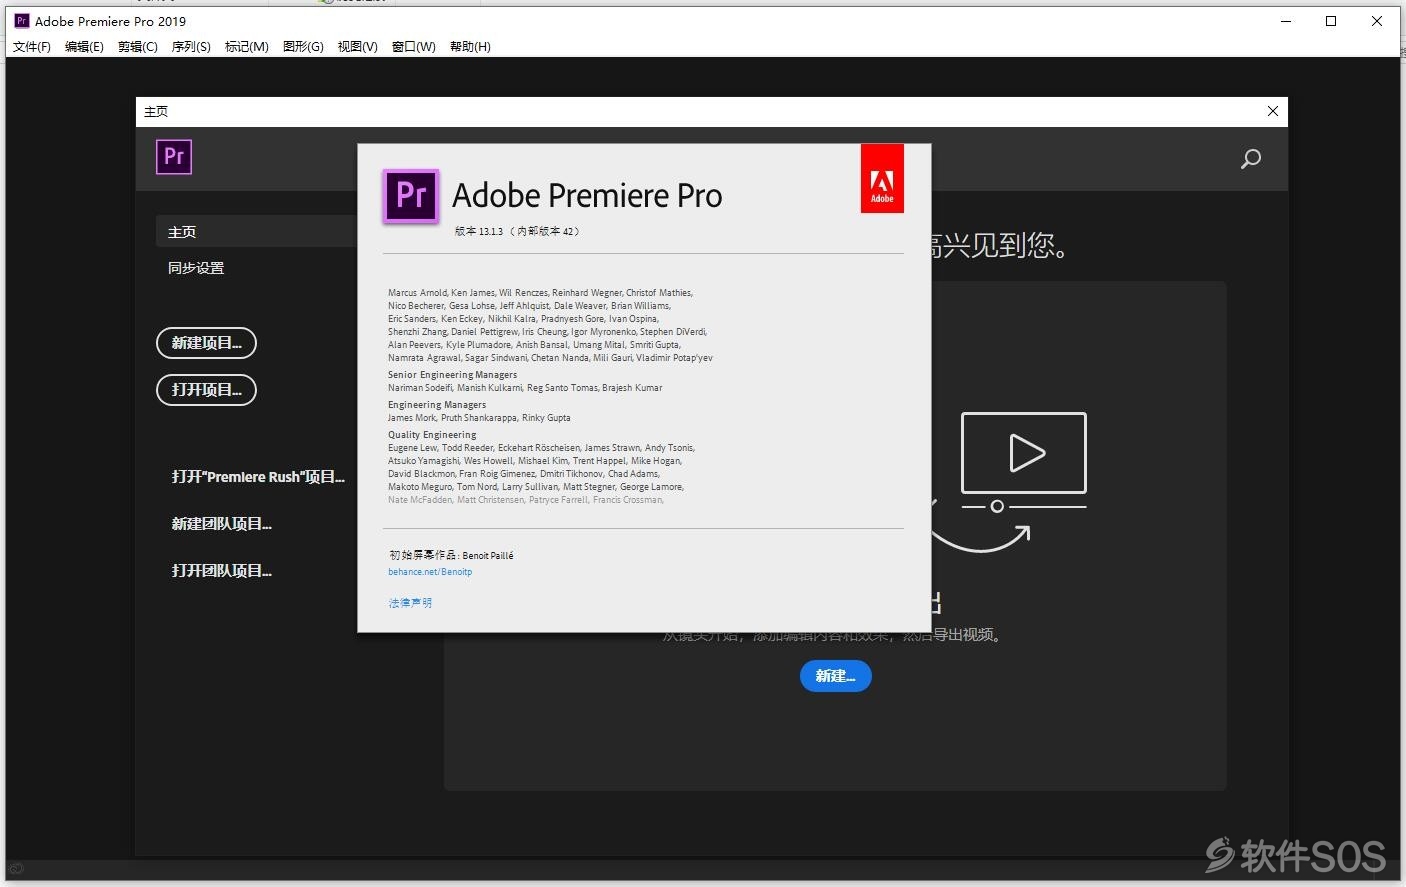 Premiere Pro CC 2019 v13.1.3 安装教程详解